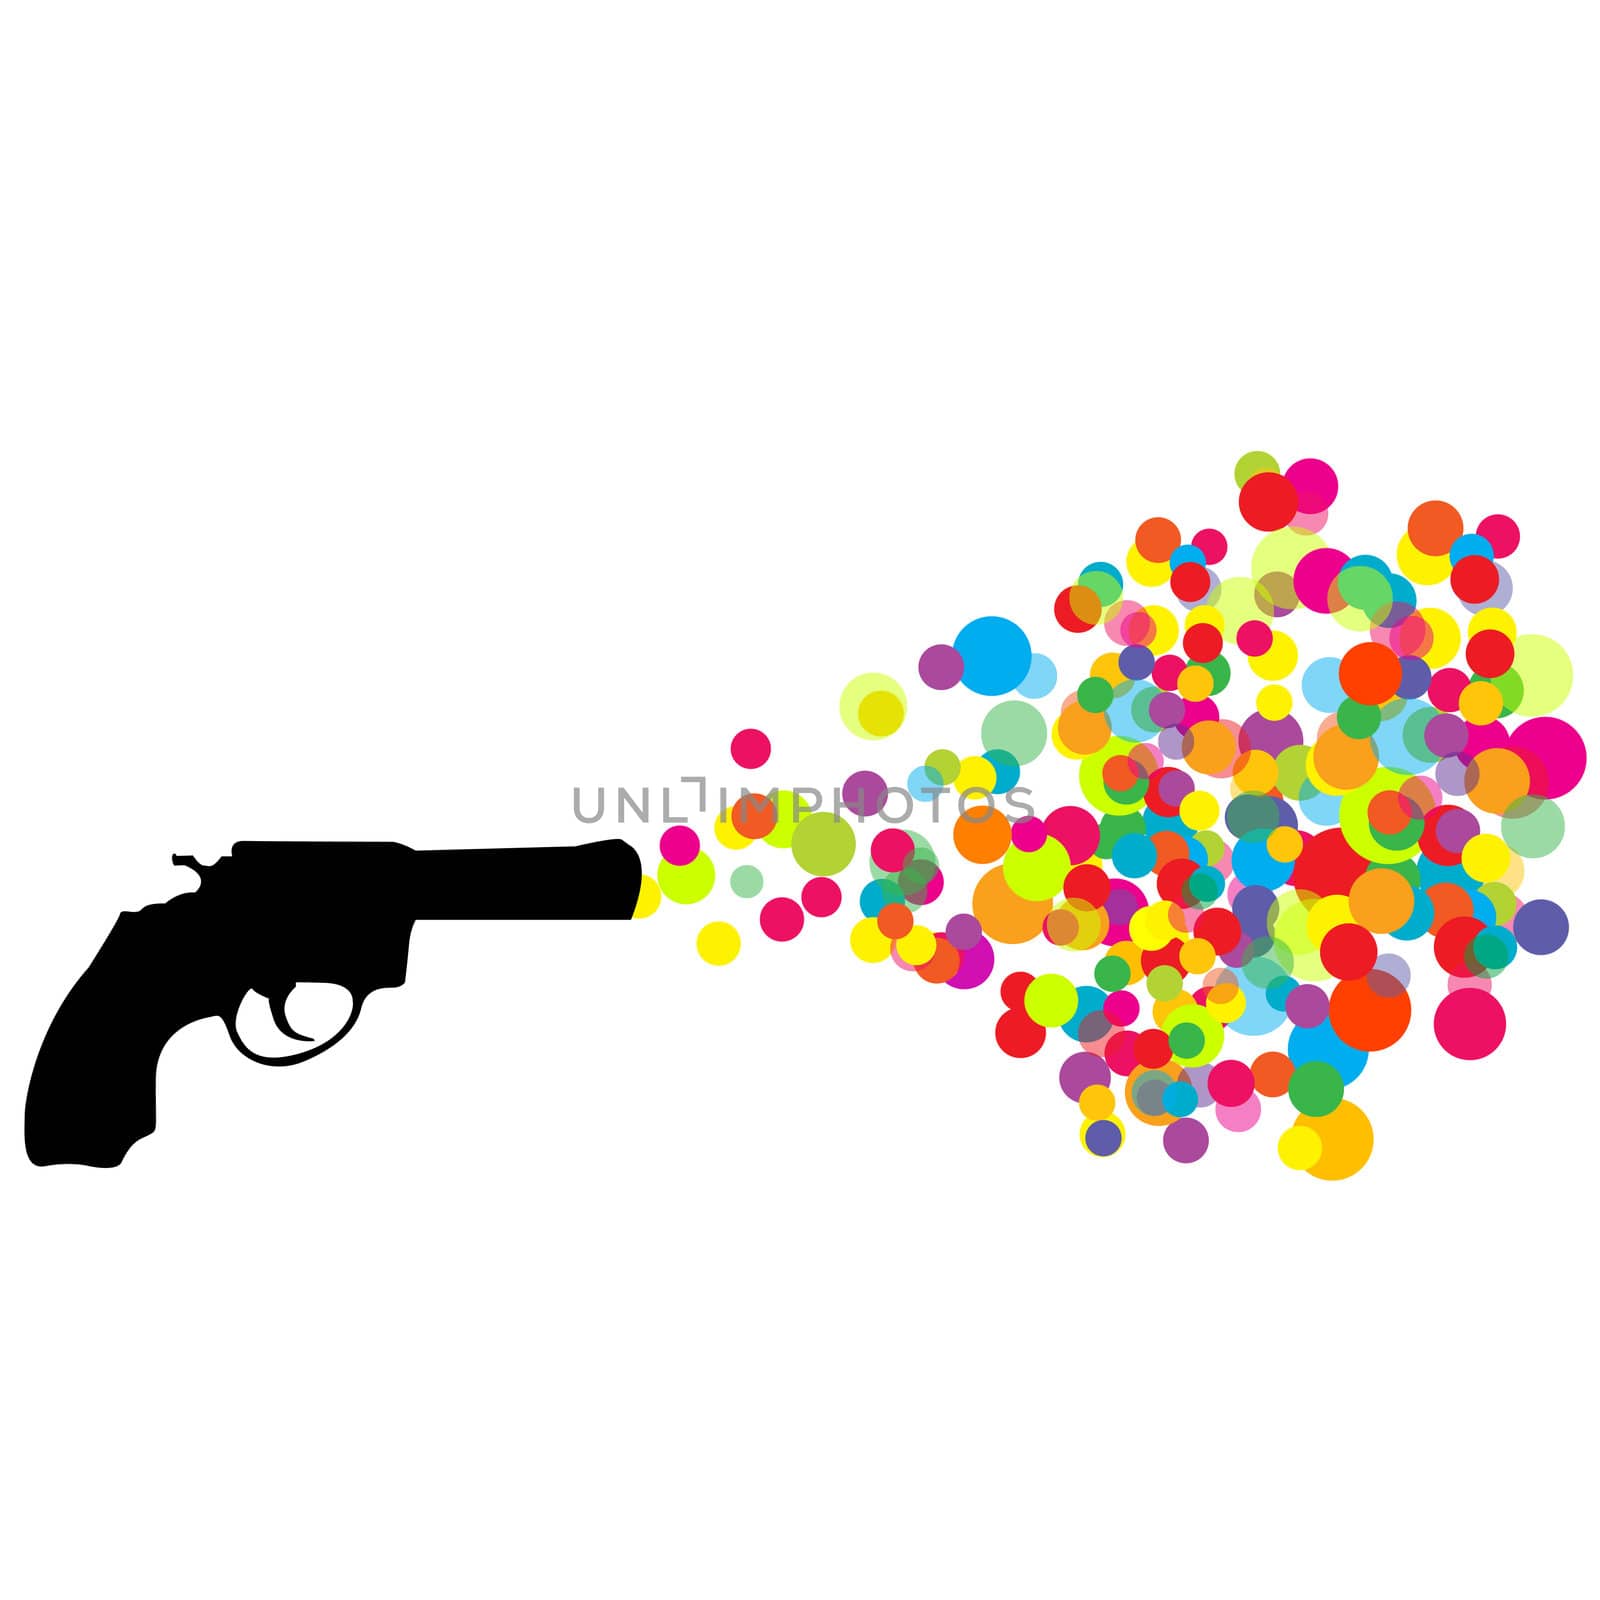 Black revolver with colored bubbles by hibrida13